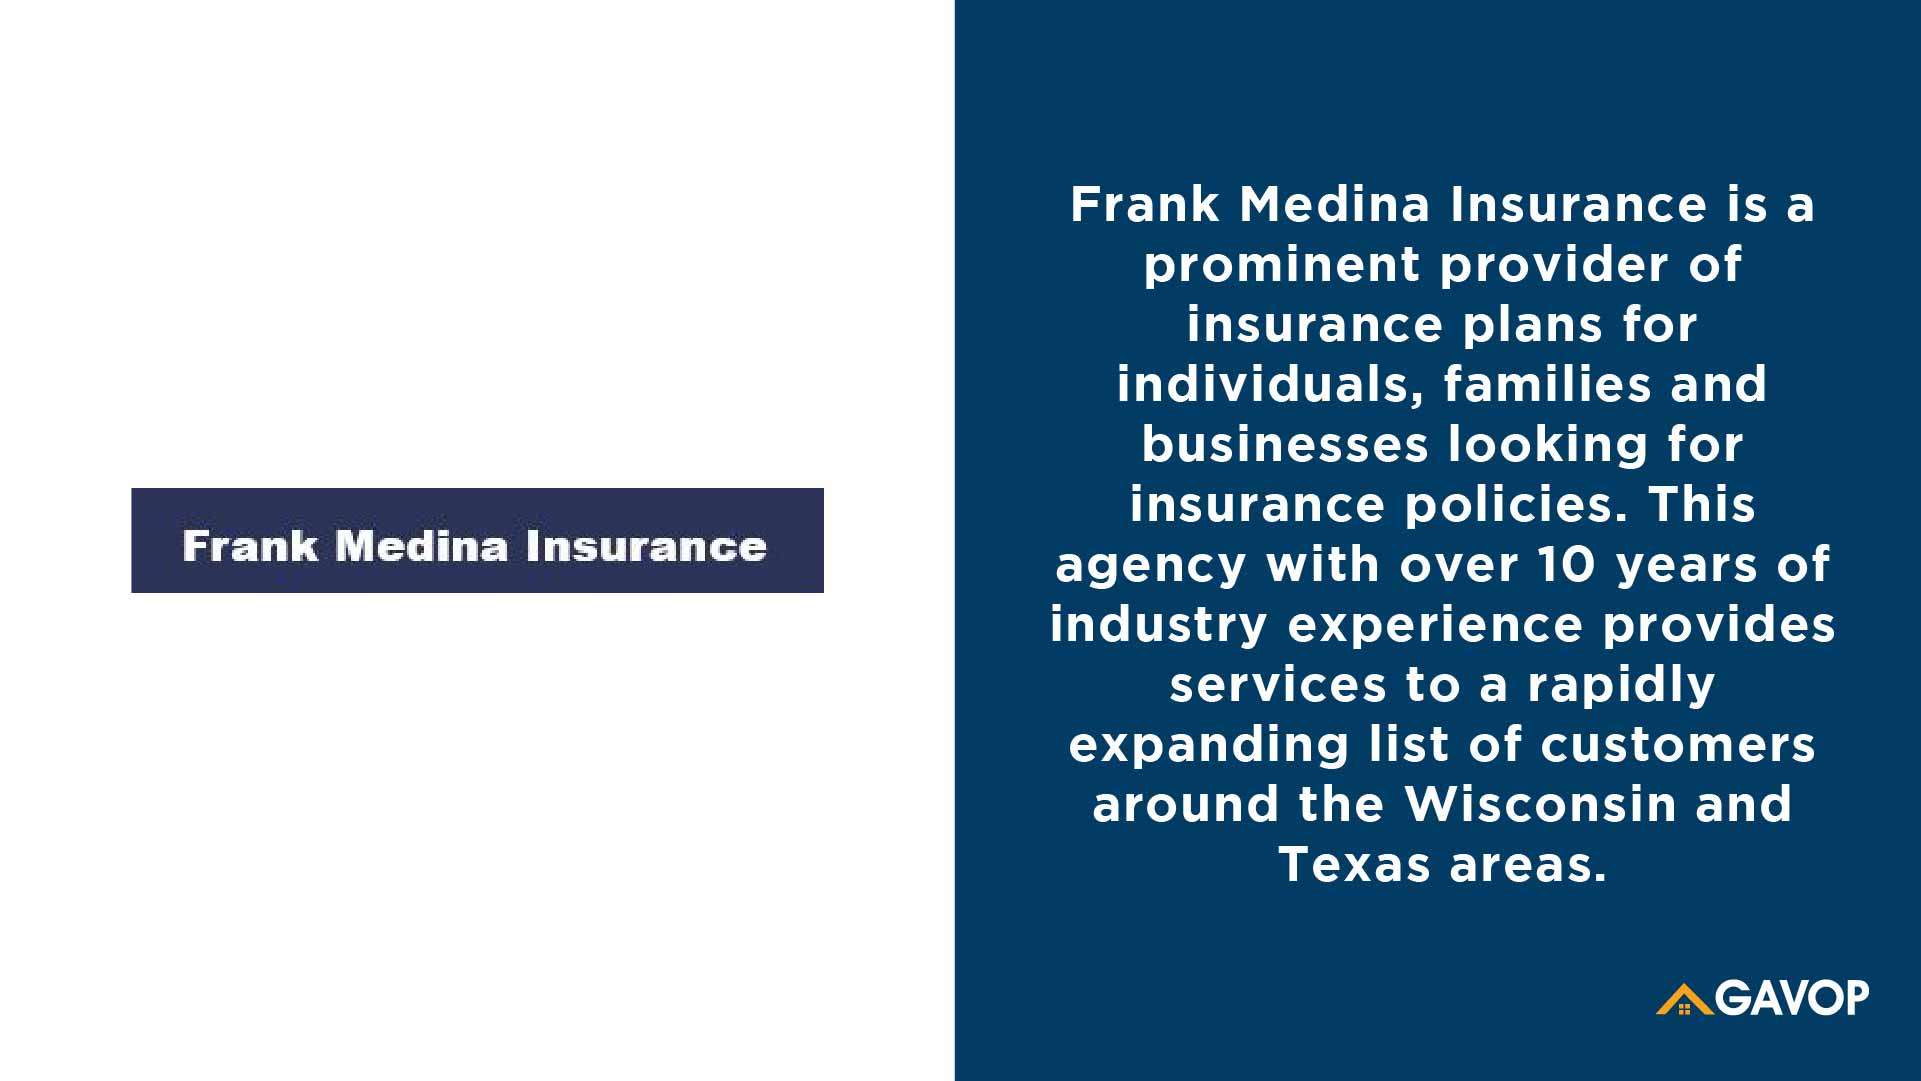 Frank Medina Insurance